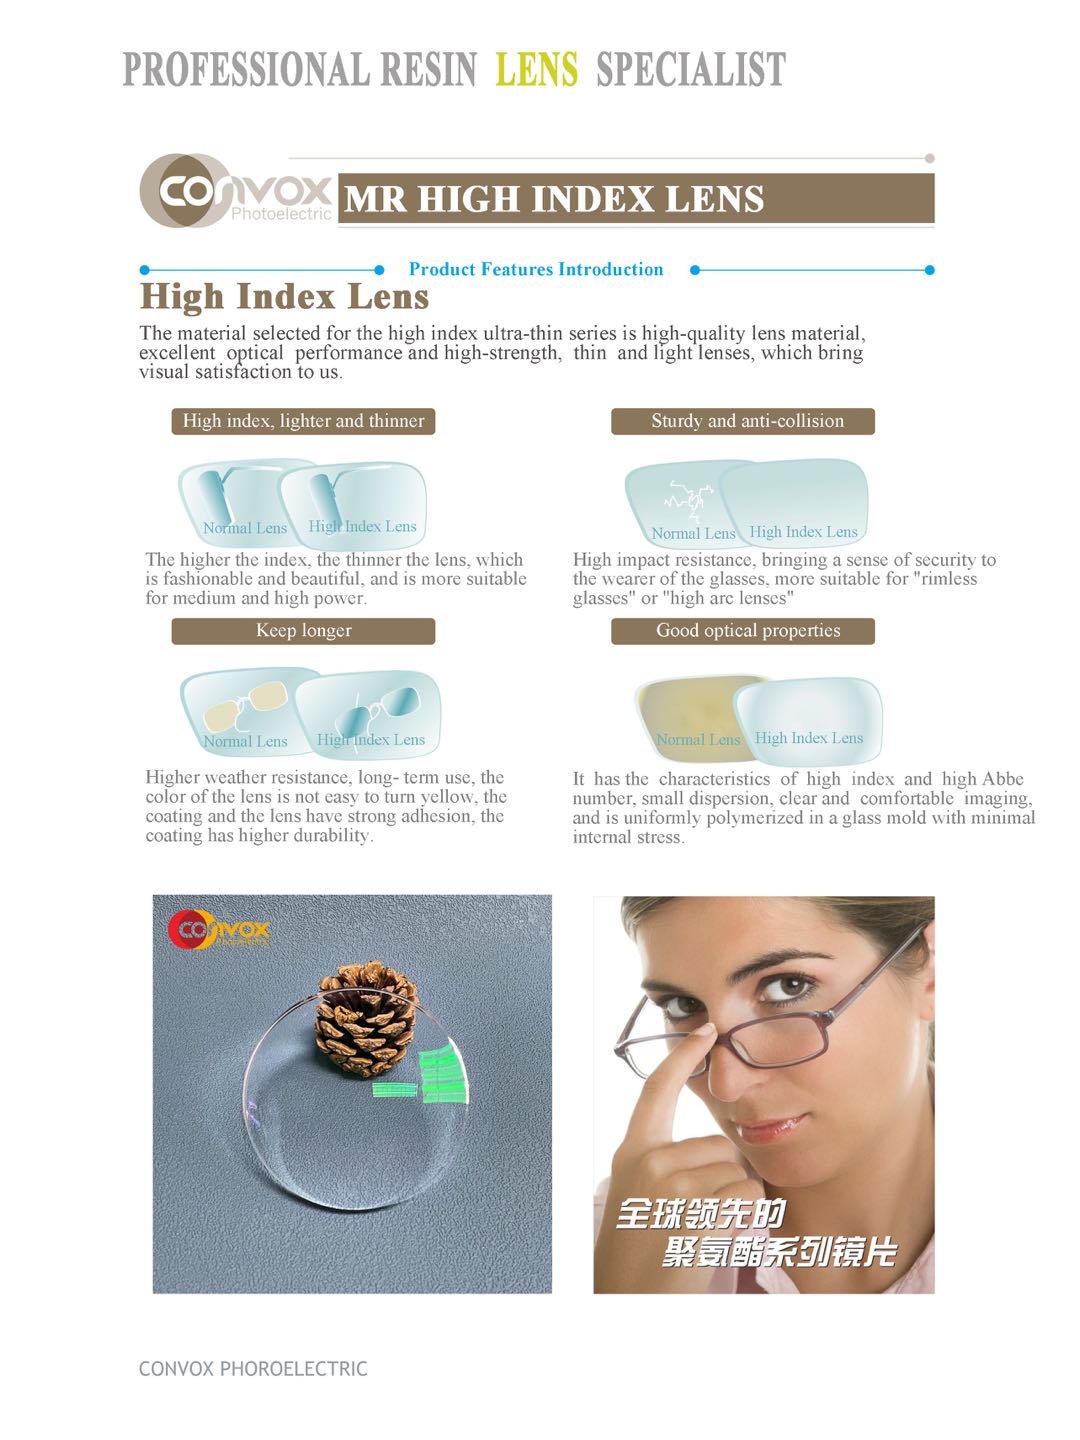 High Index Lens-Make Your Glasses More Fashion